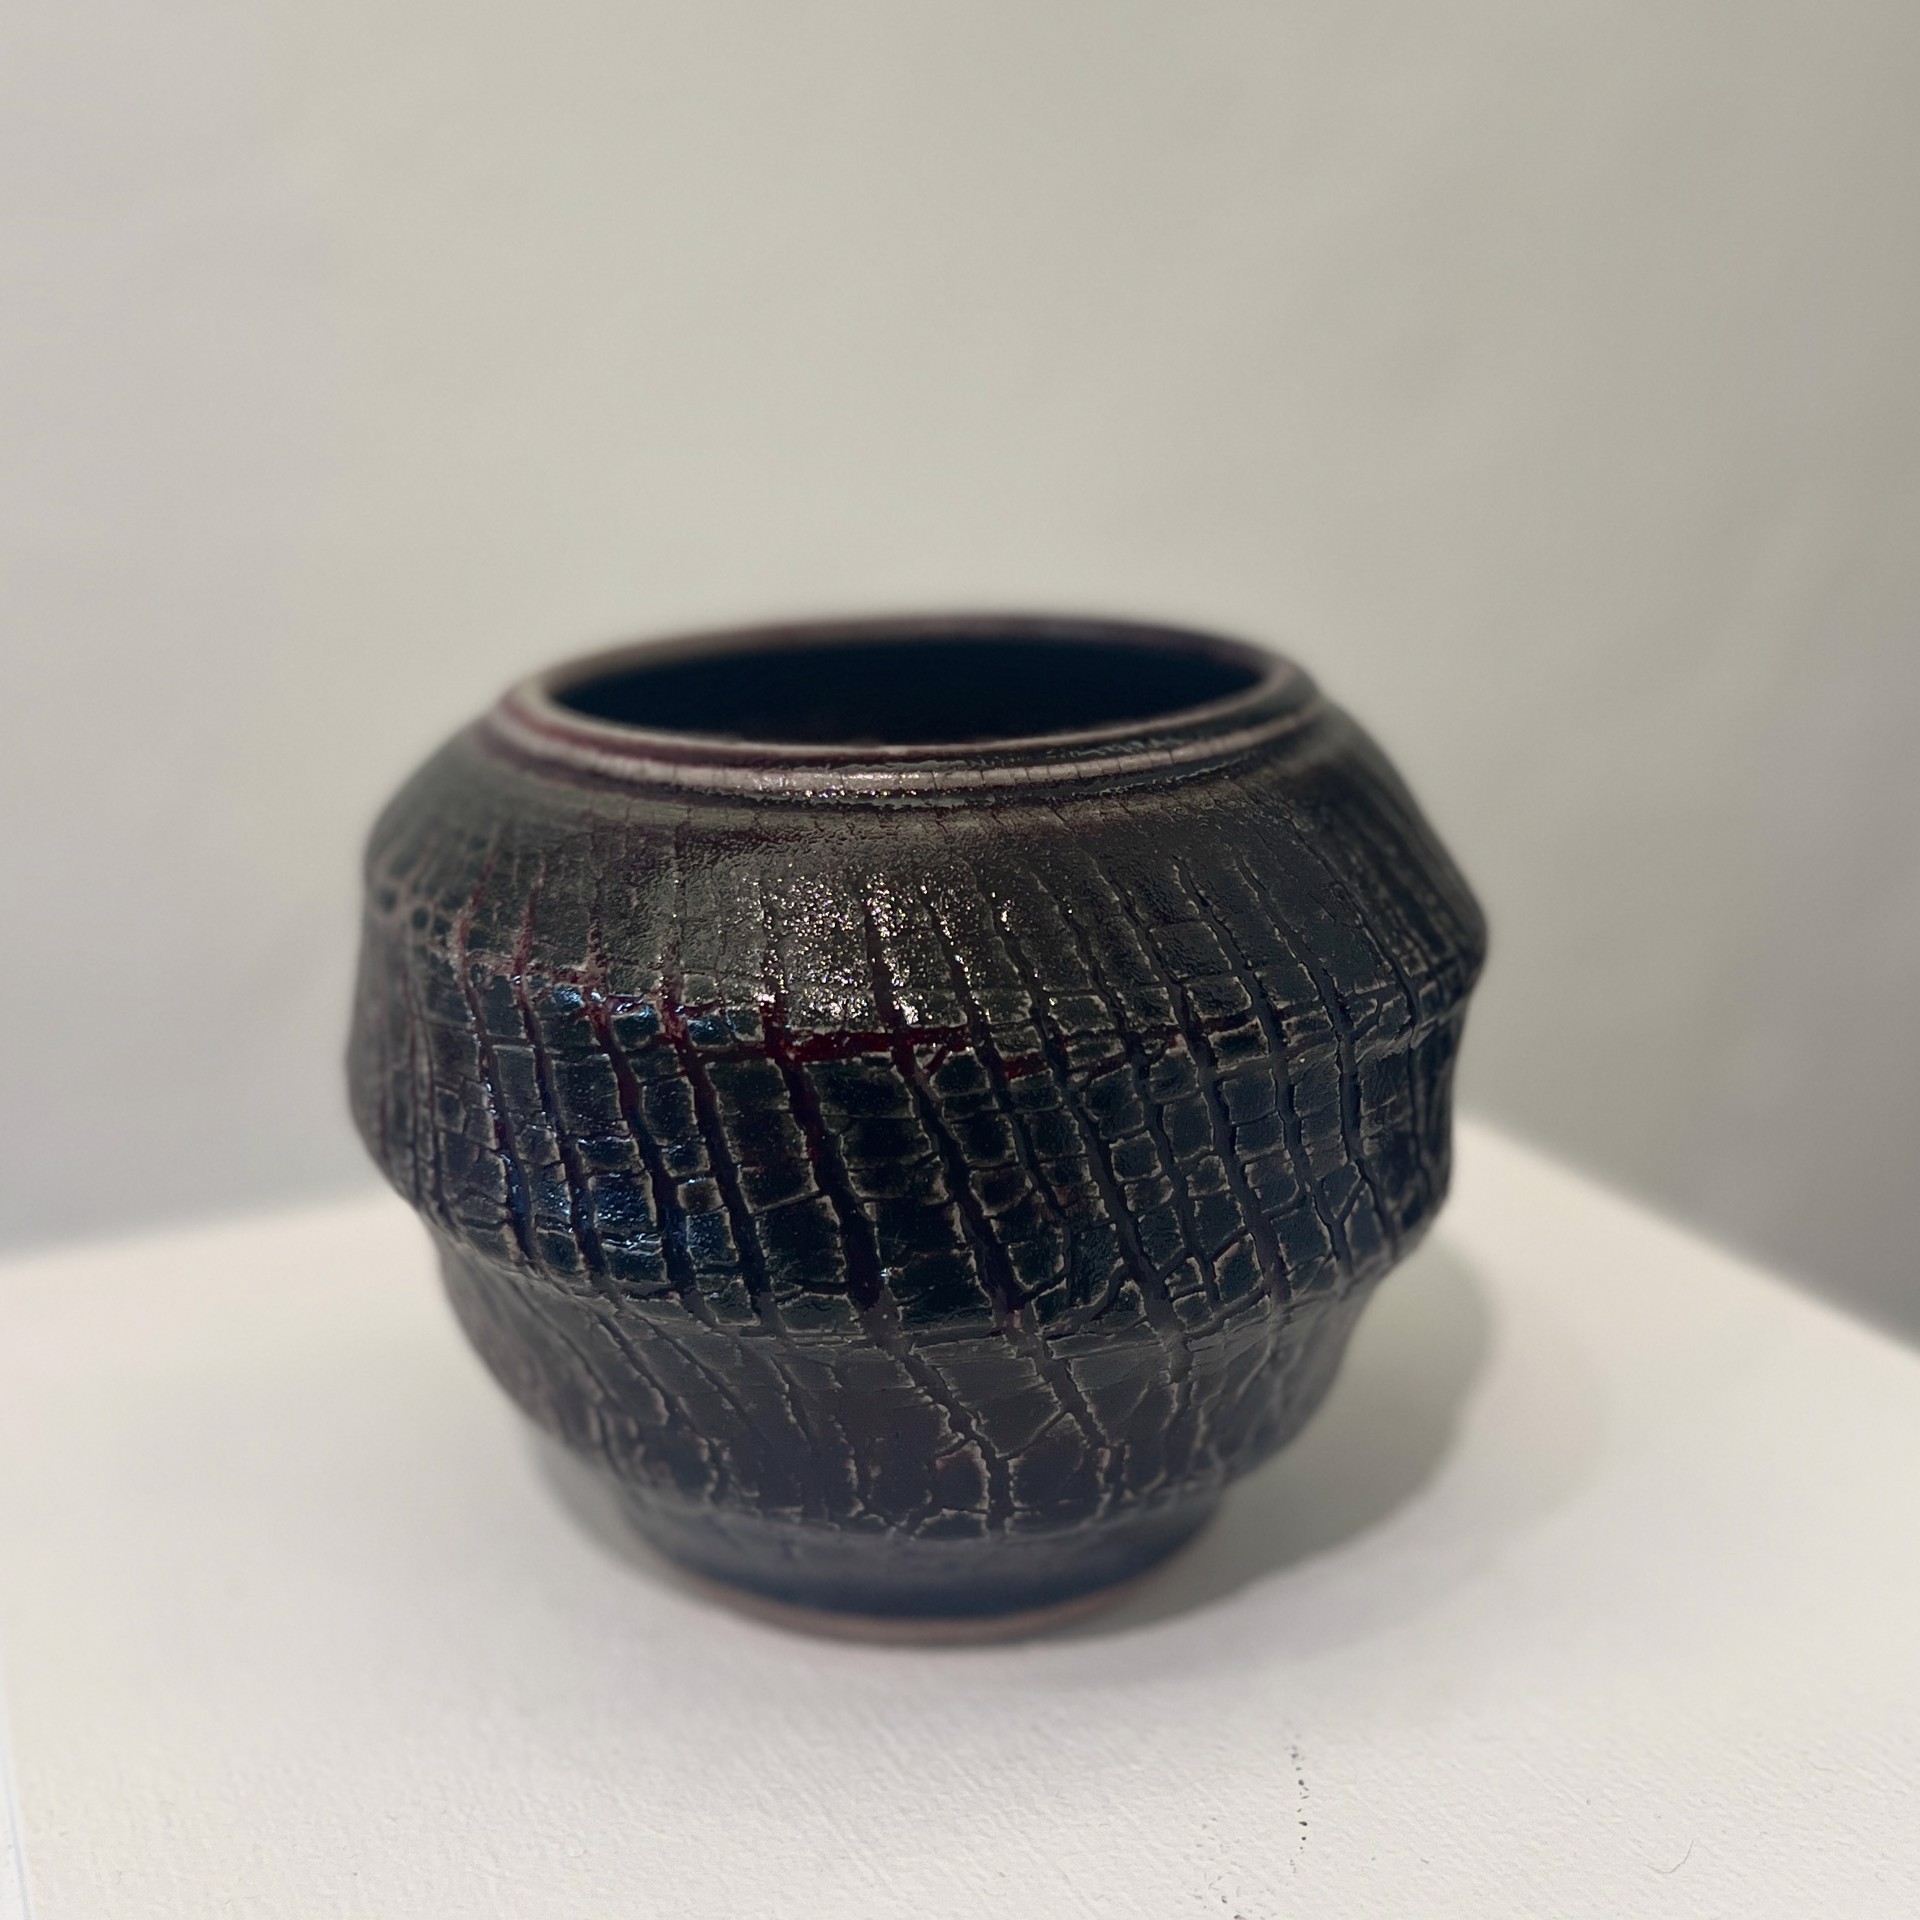 Vase 35 by David LaLomia